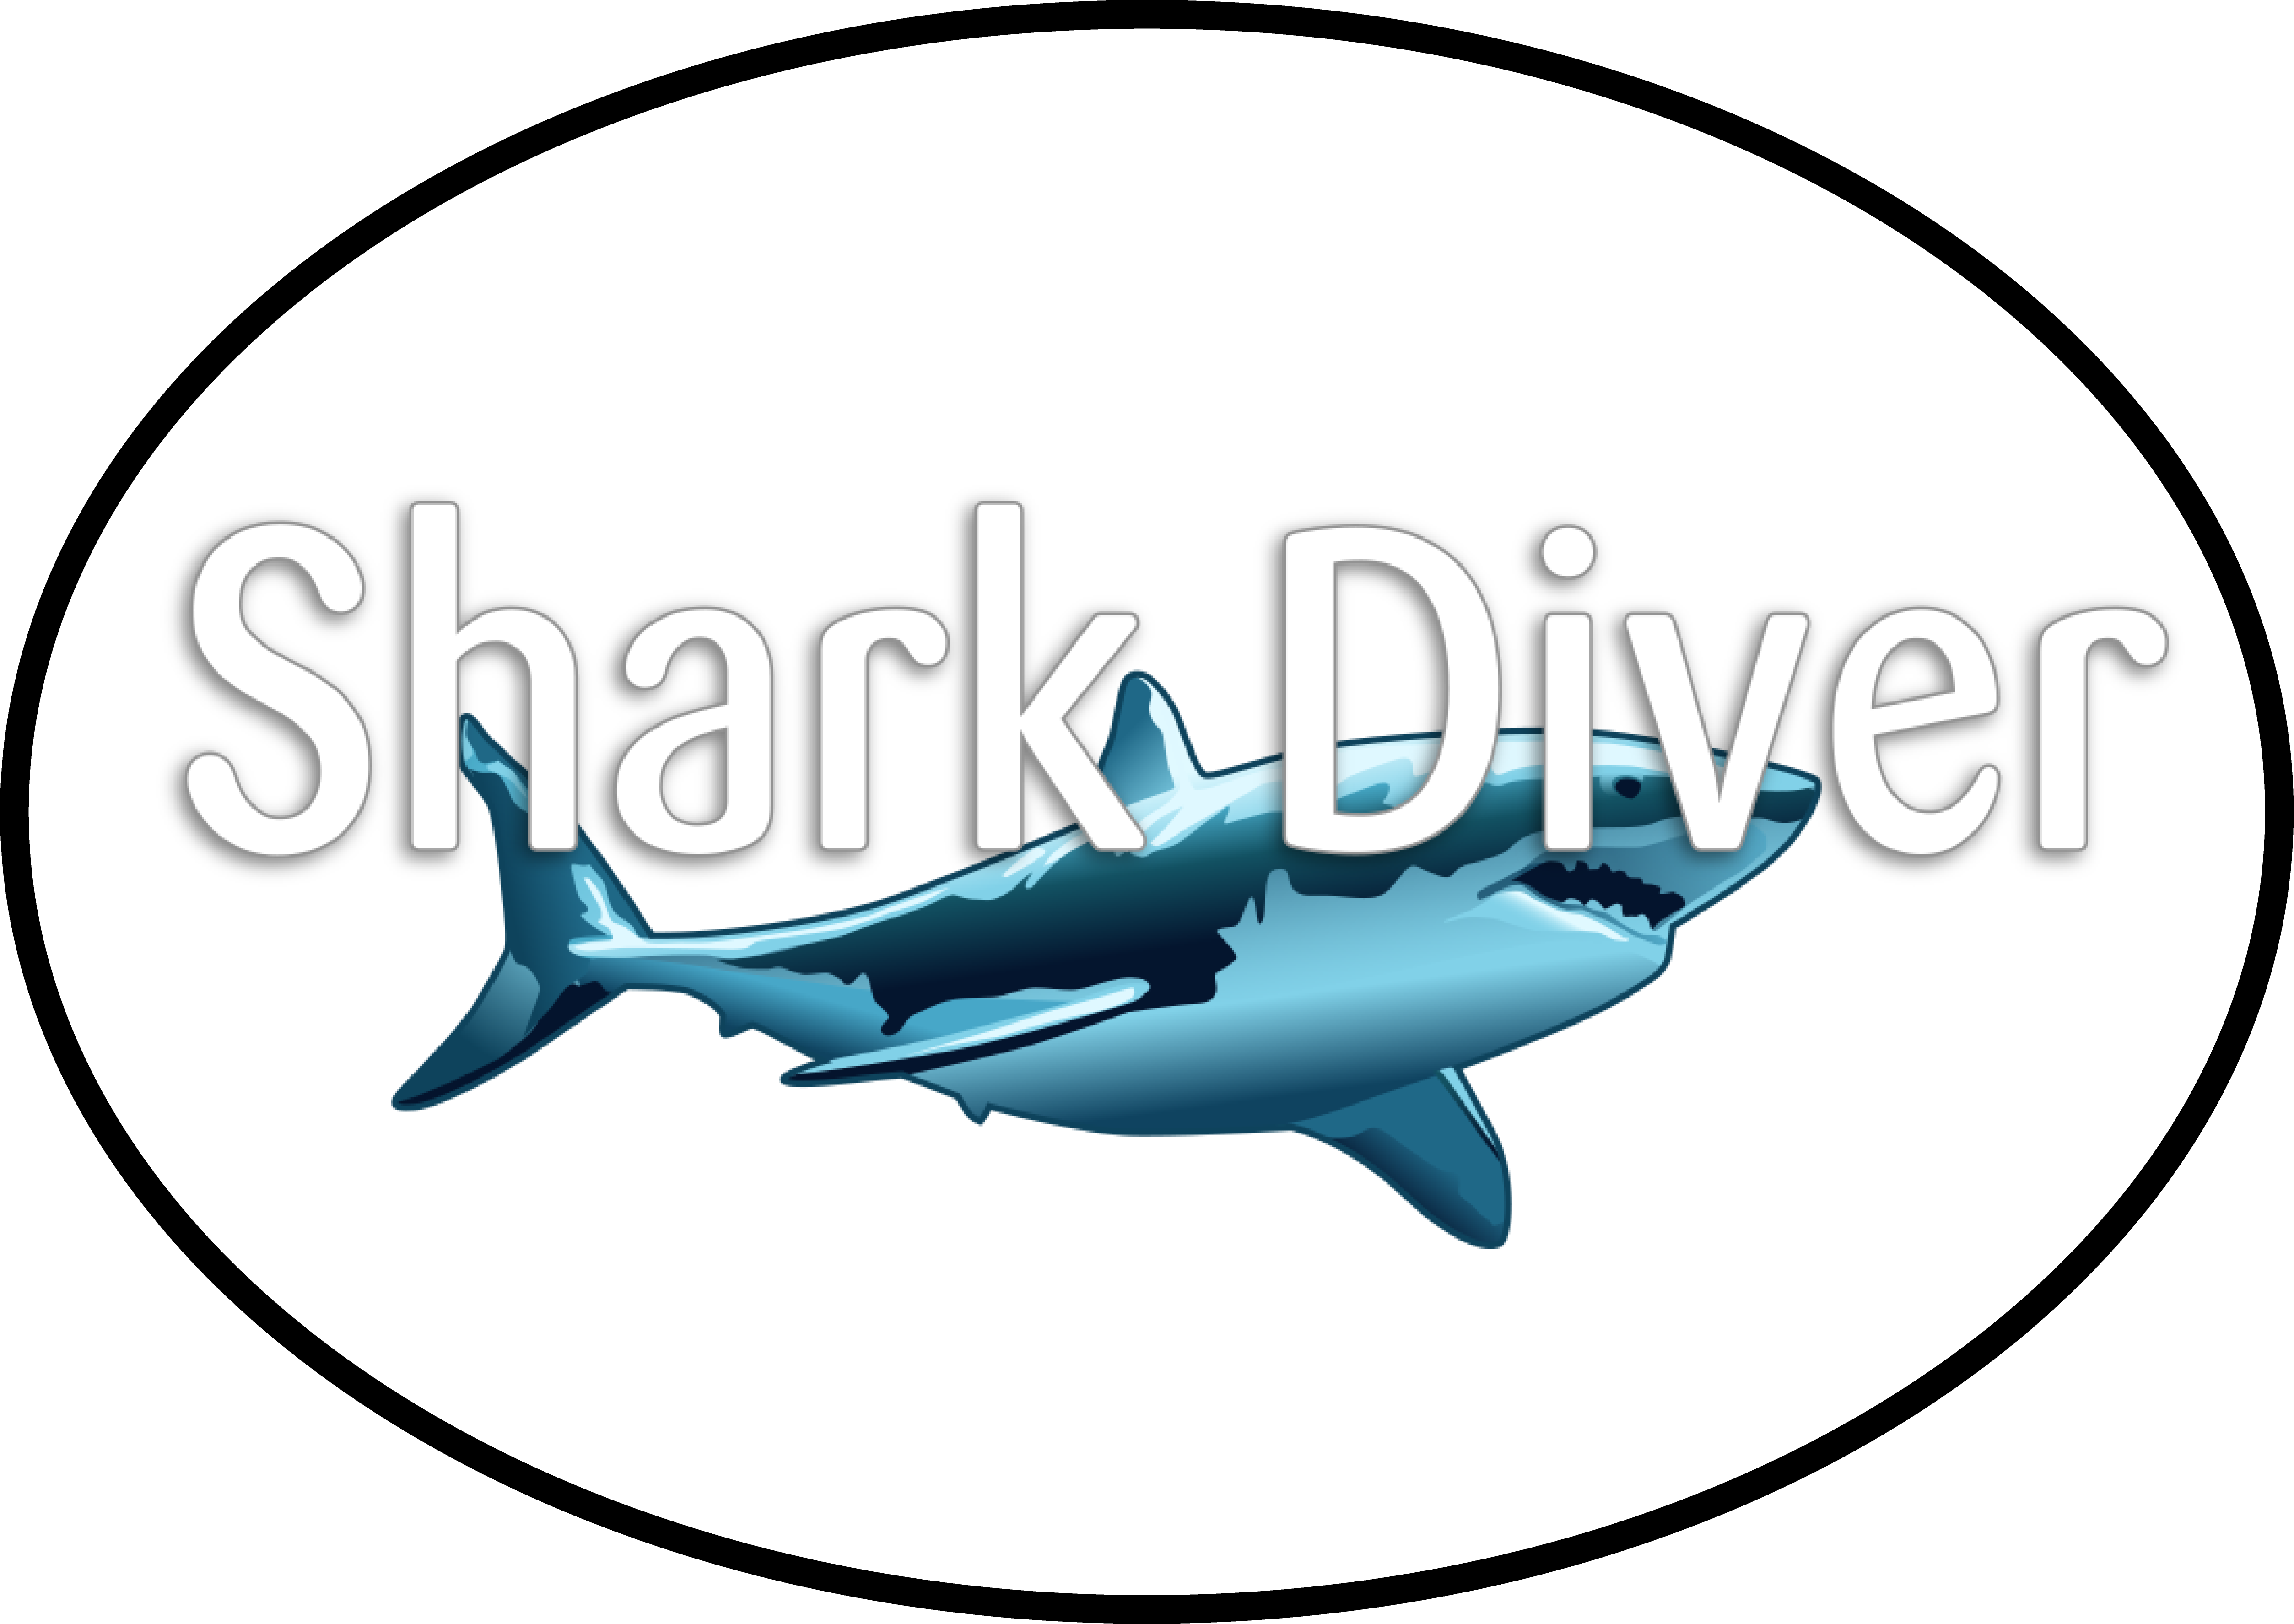 Shark Diver Oval Sticker Design - Vectorized